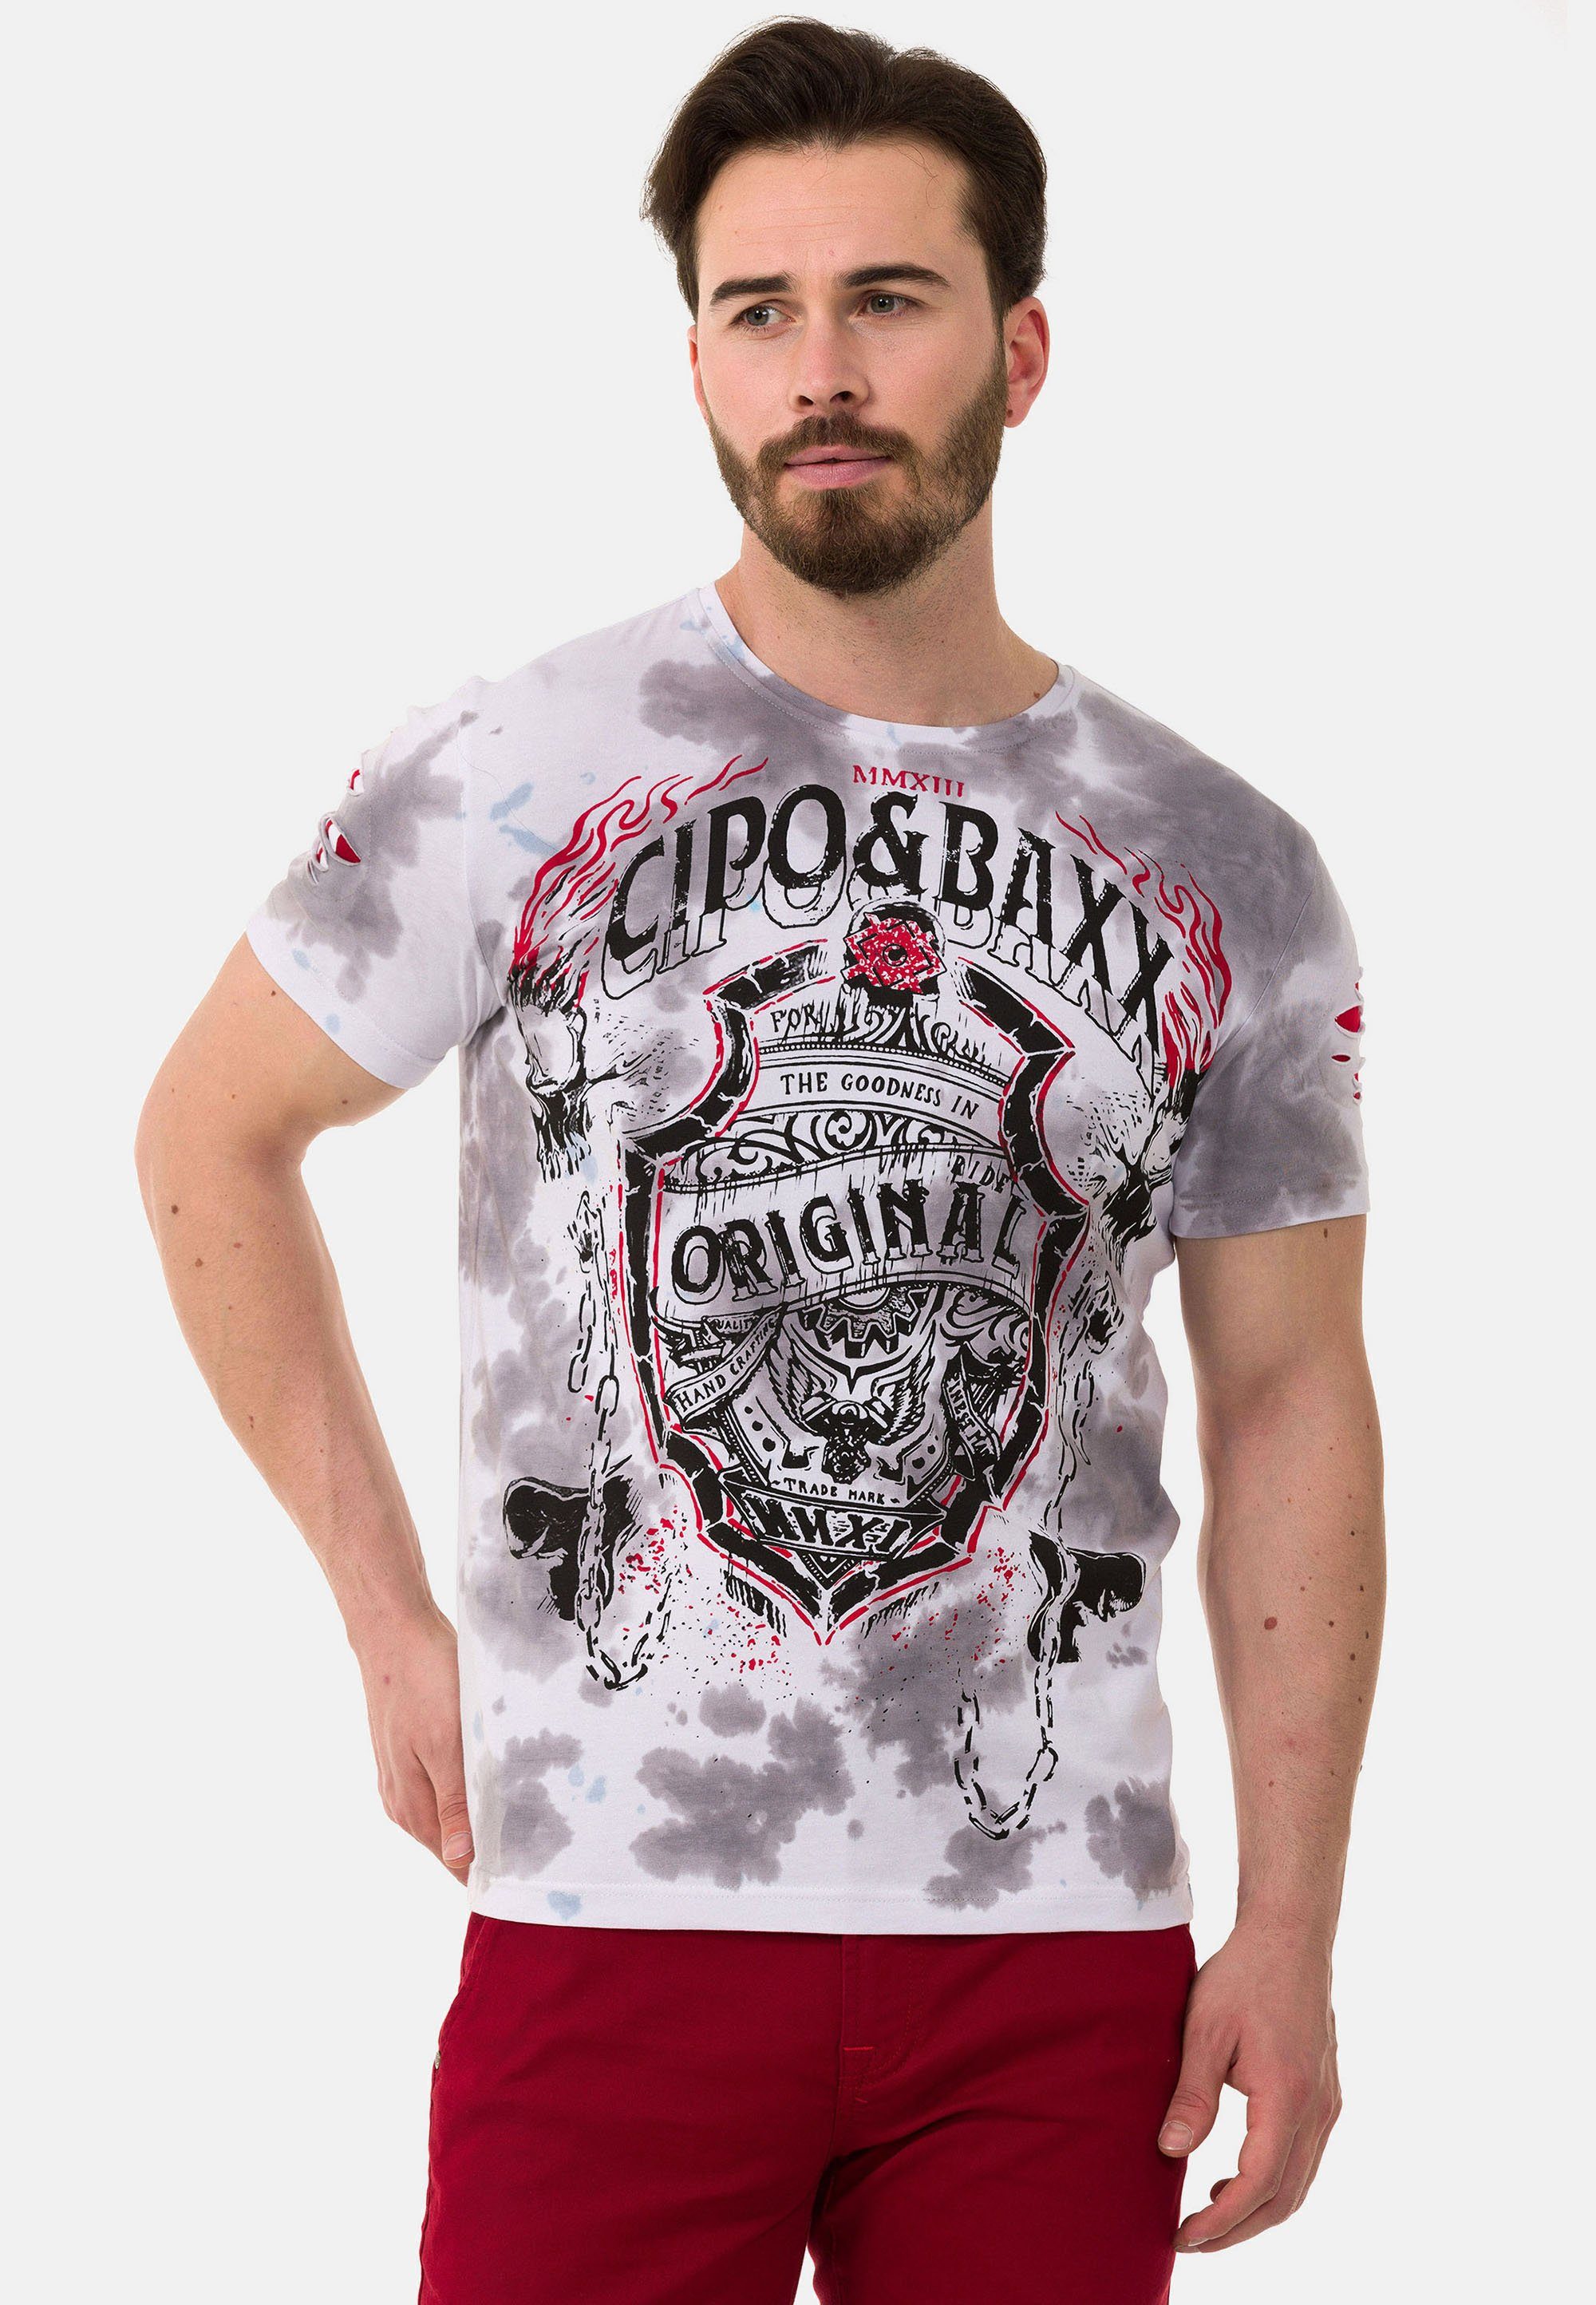 Markenprint & weiß T-Shirt mit Cipo großem Baxx